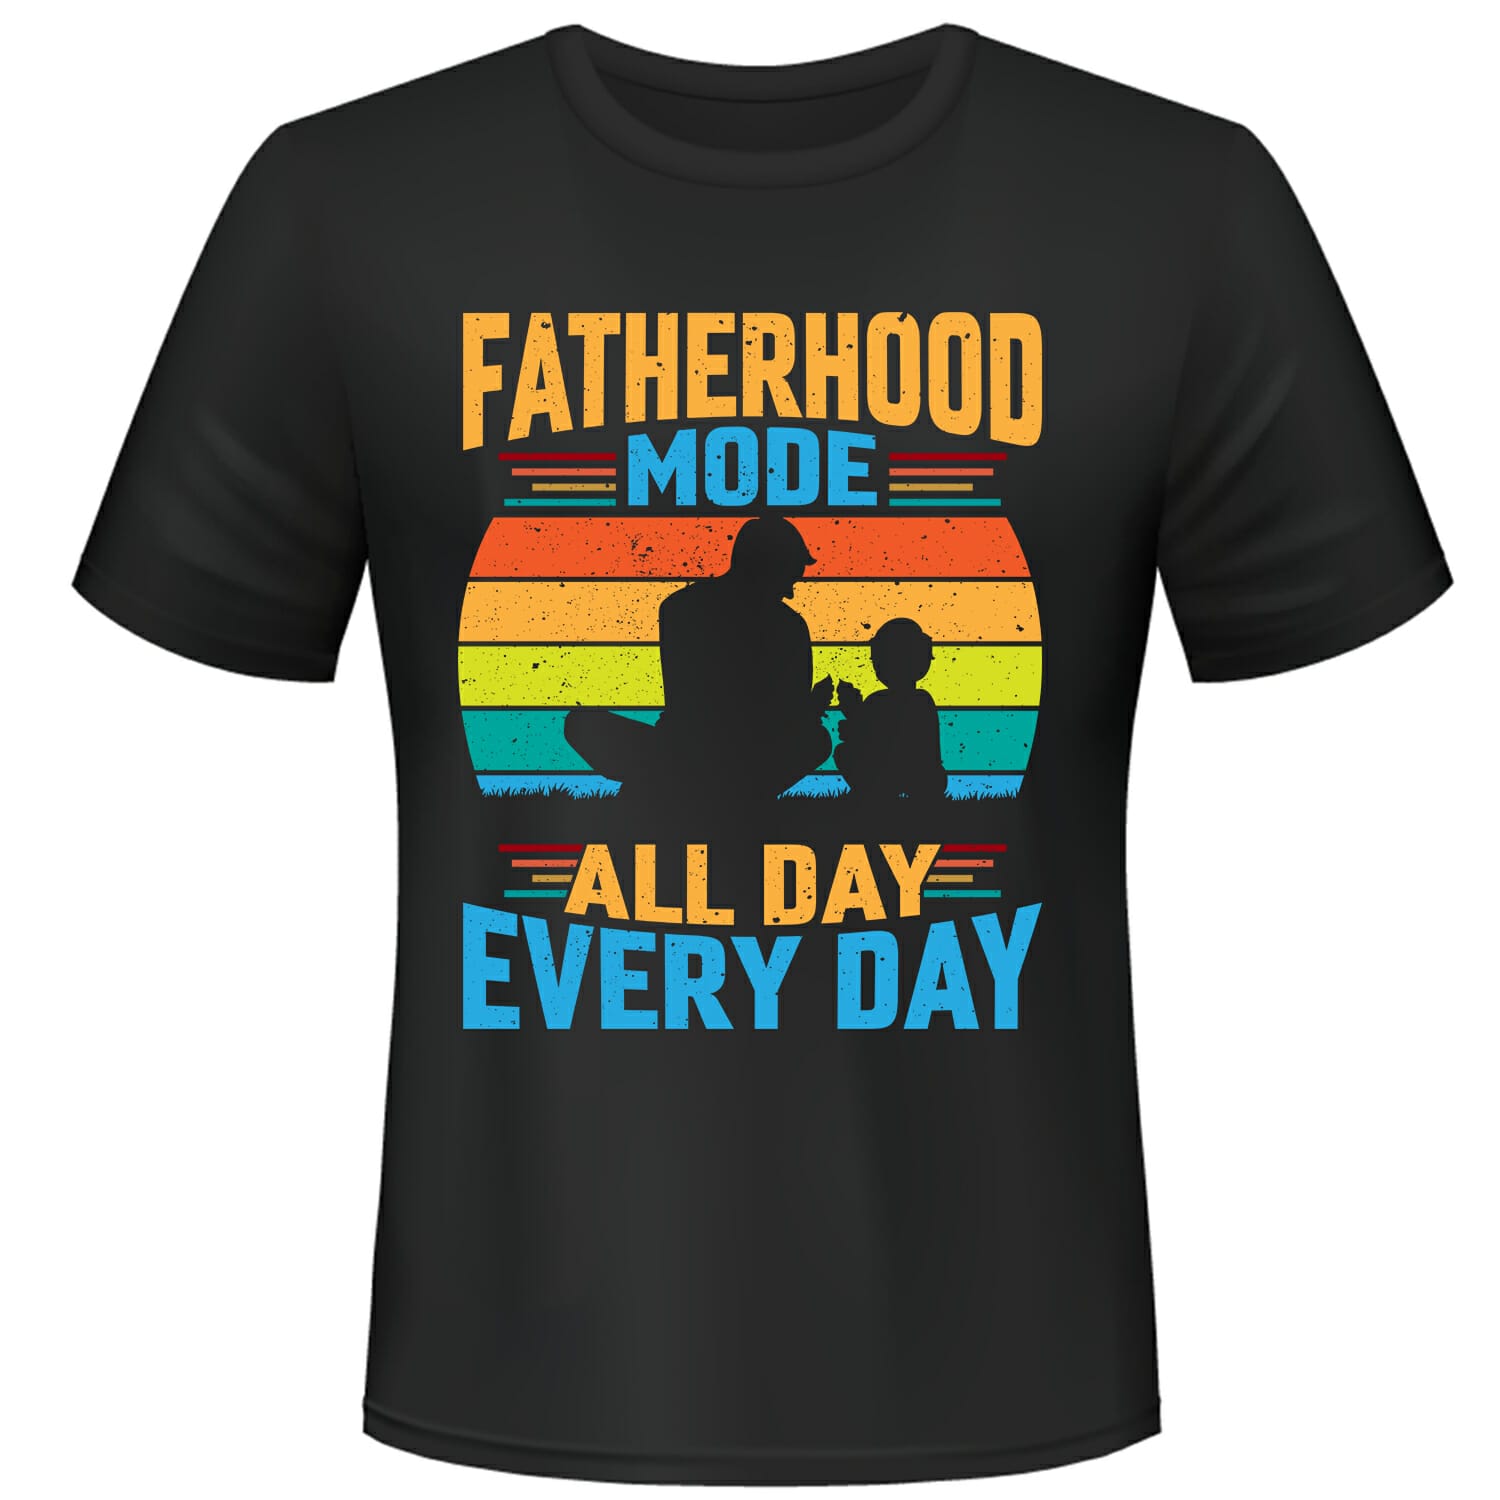 fatherhood mode all day every day tshirt design